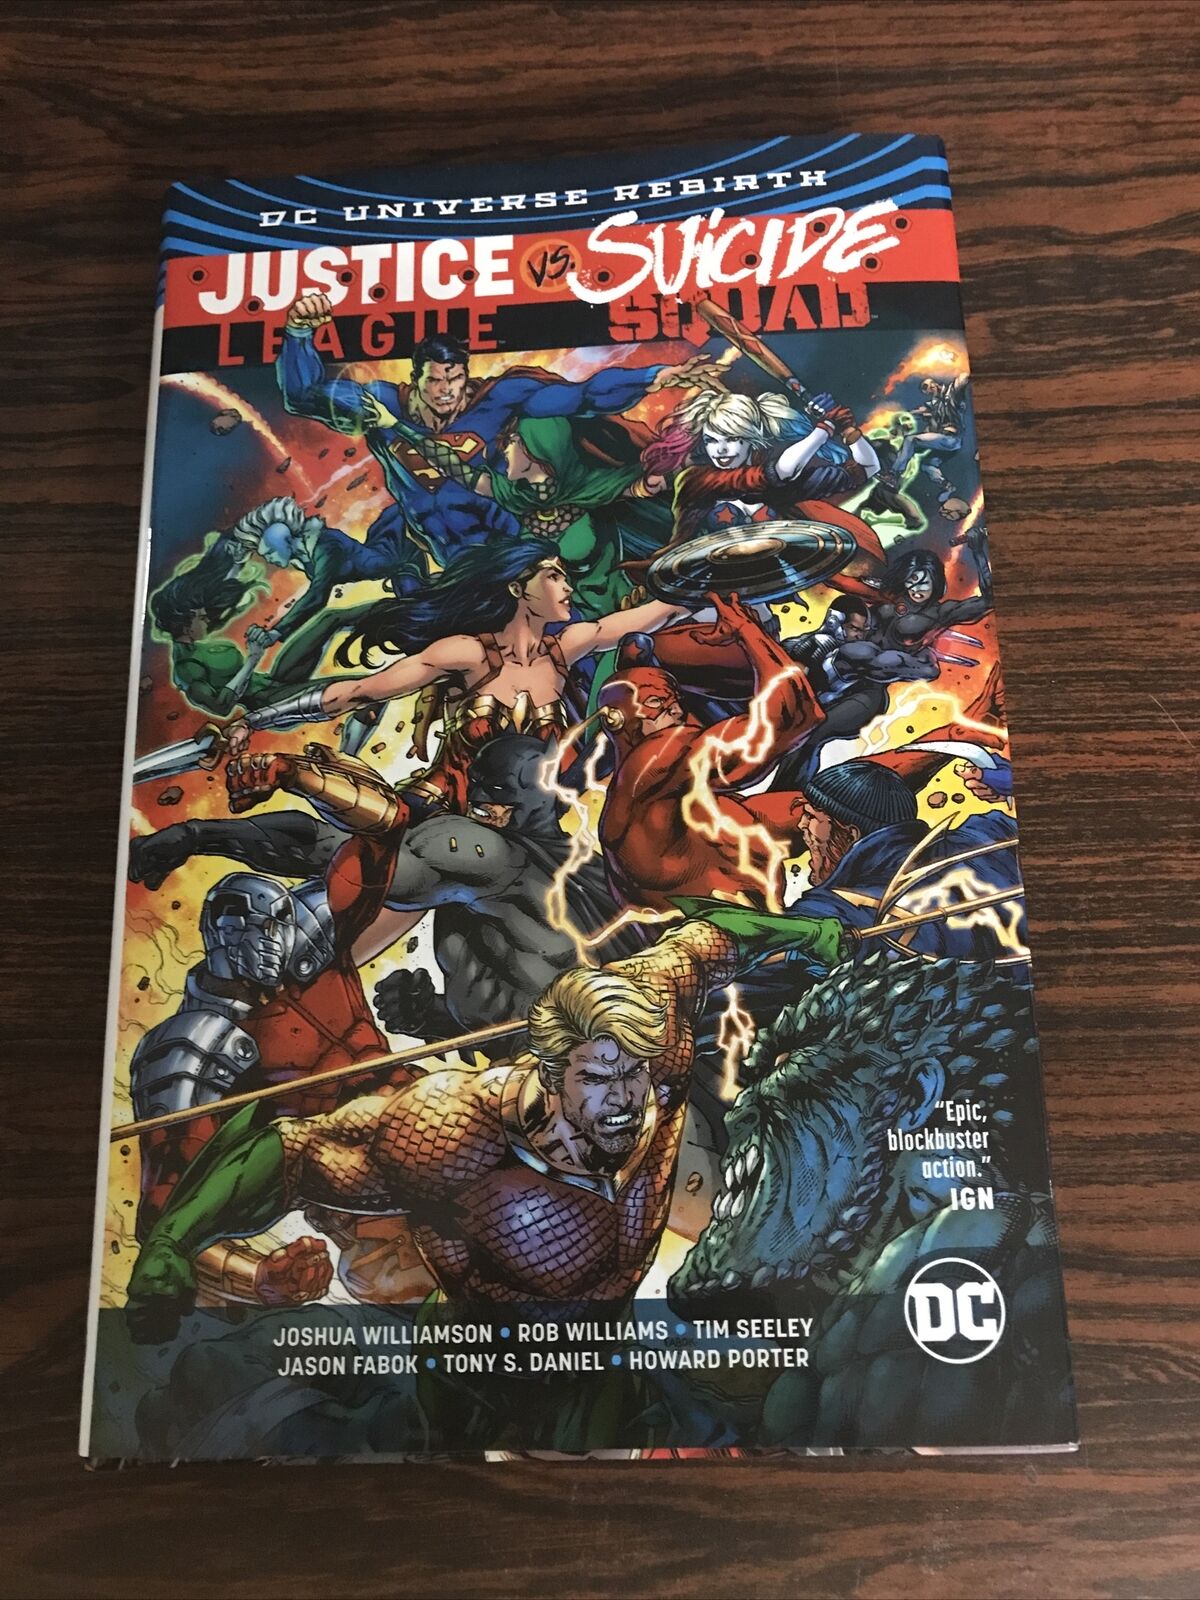 Justice League vs. Suicide Squad - DC Comics Hardcover by Joshua Williamson